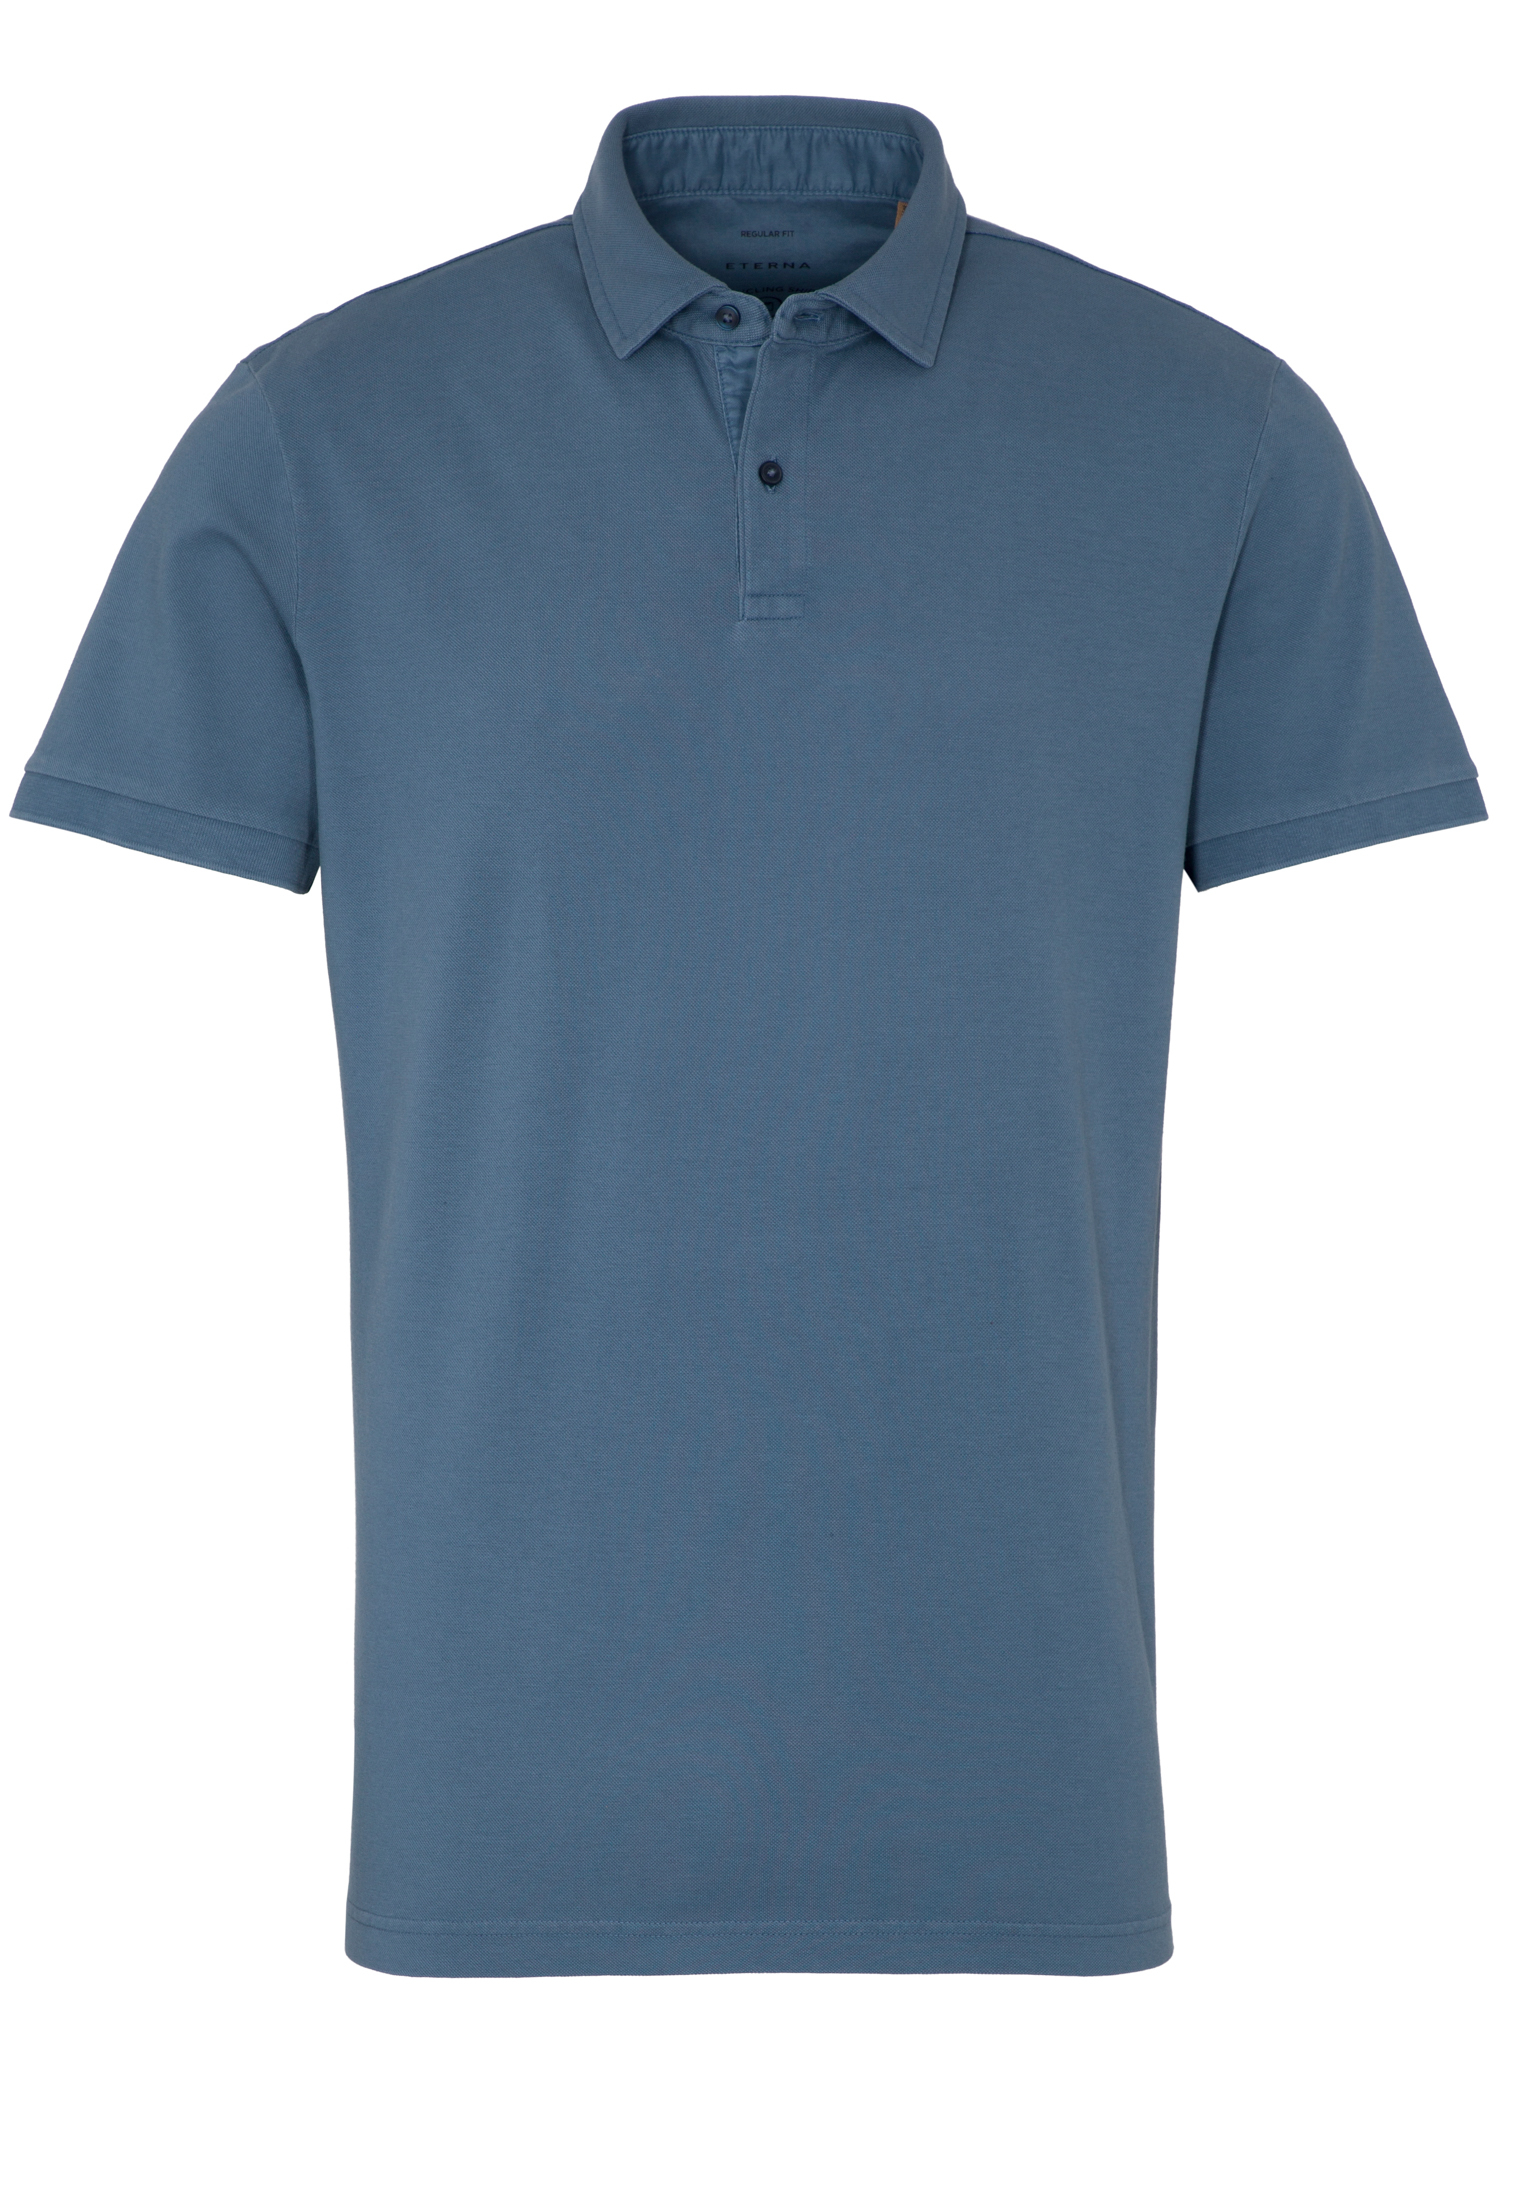 MODERN FIT Poloshirt in blau 4XL 1SP00087-01-41-4XL-1/2 unifarben | | Kurzarm | blau 